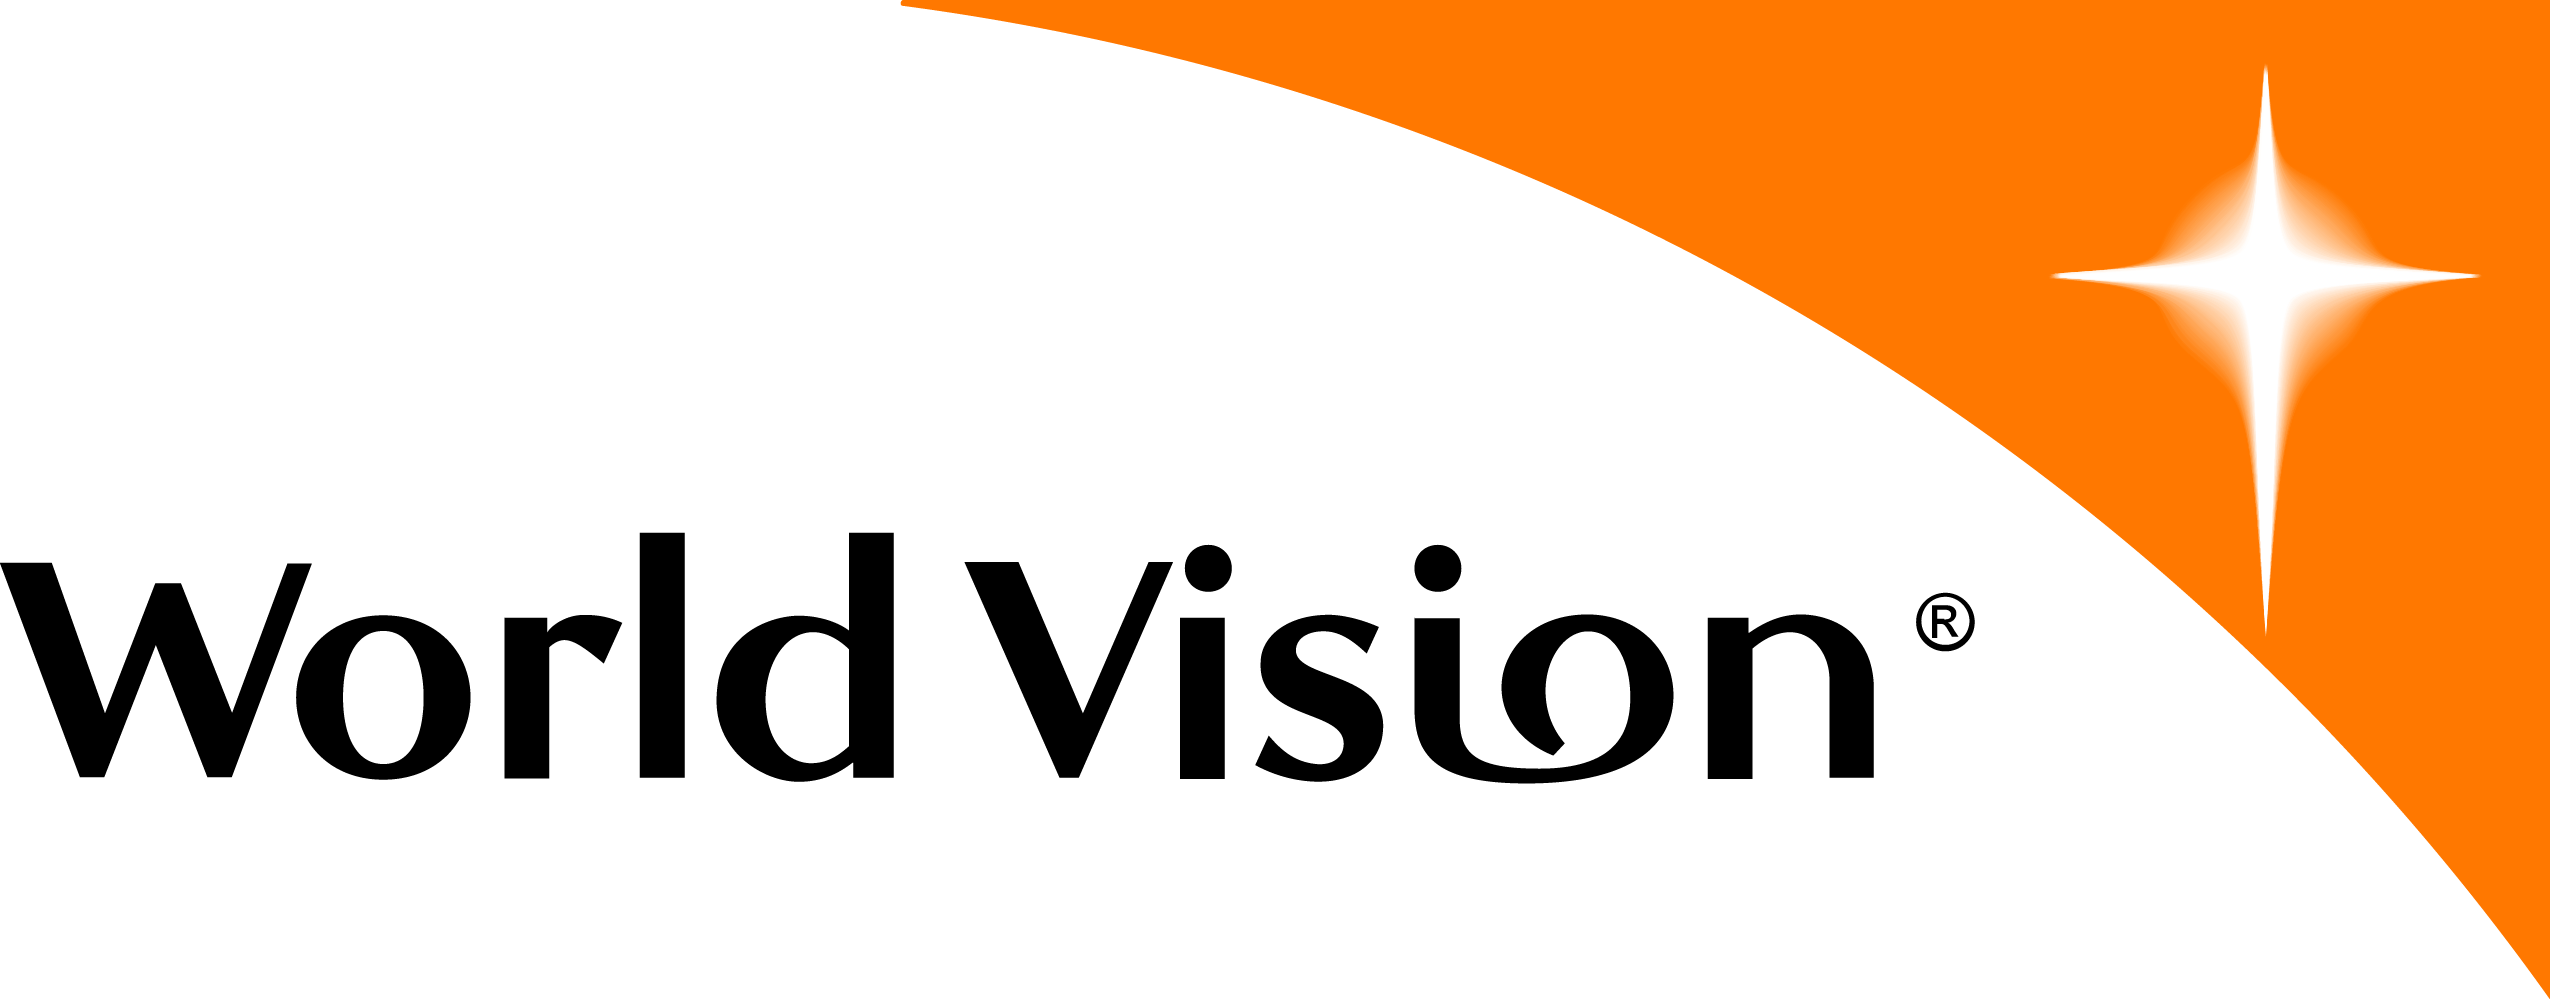 World Vision Logo png